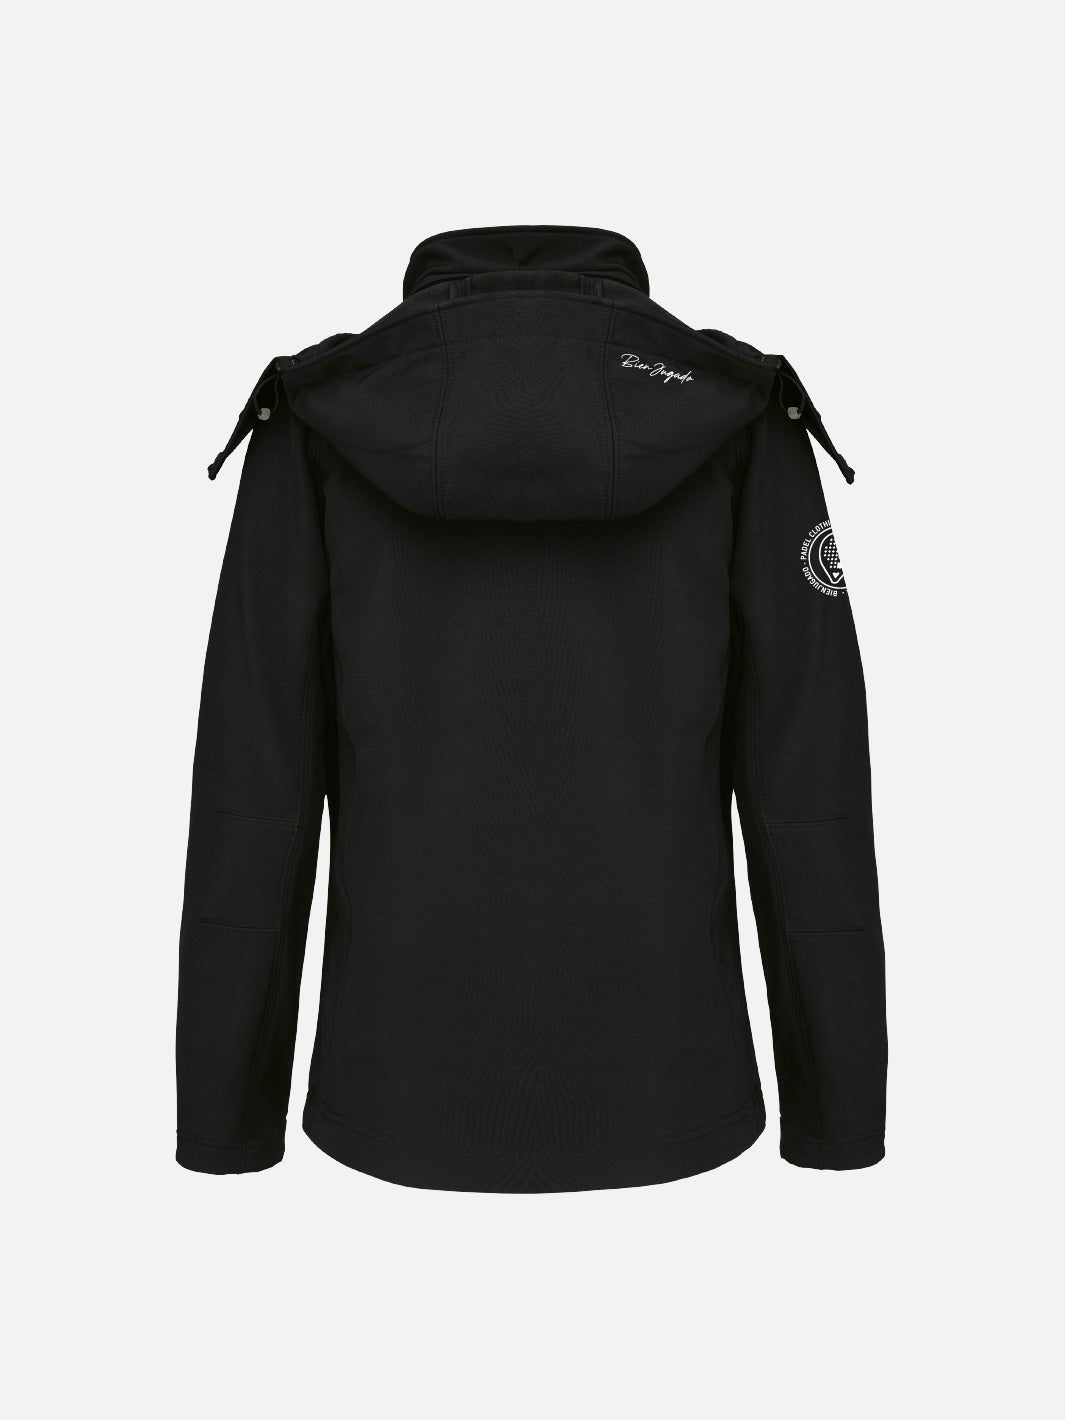 Women's Softshell Jacket with hood - Black